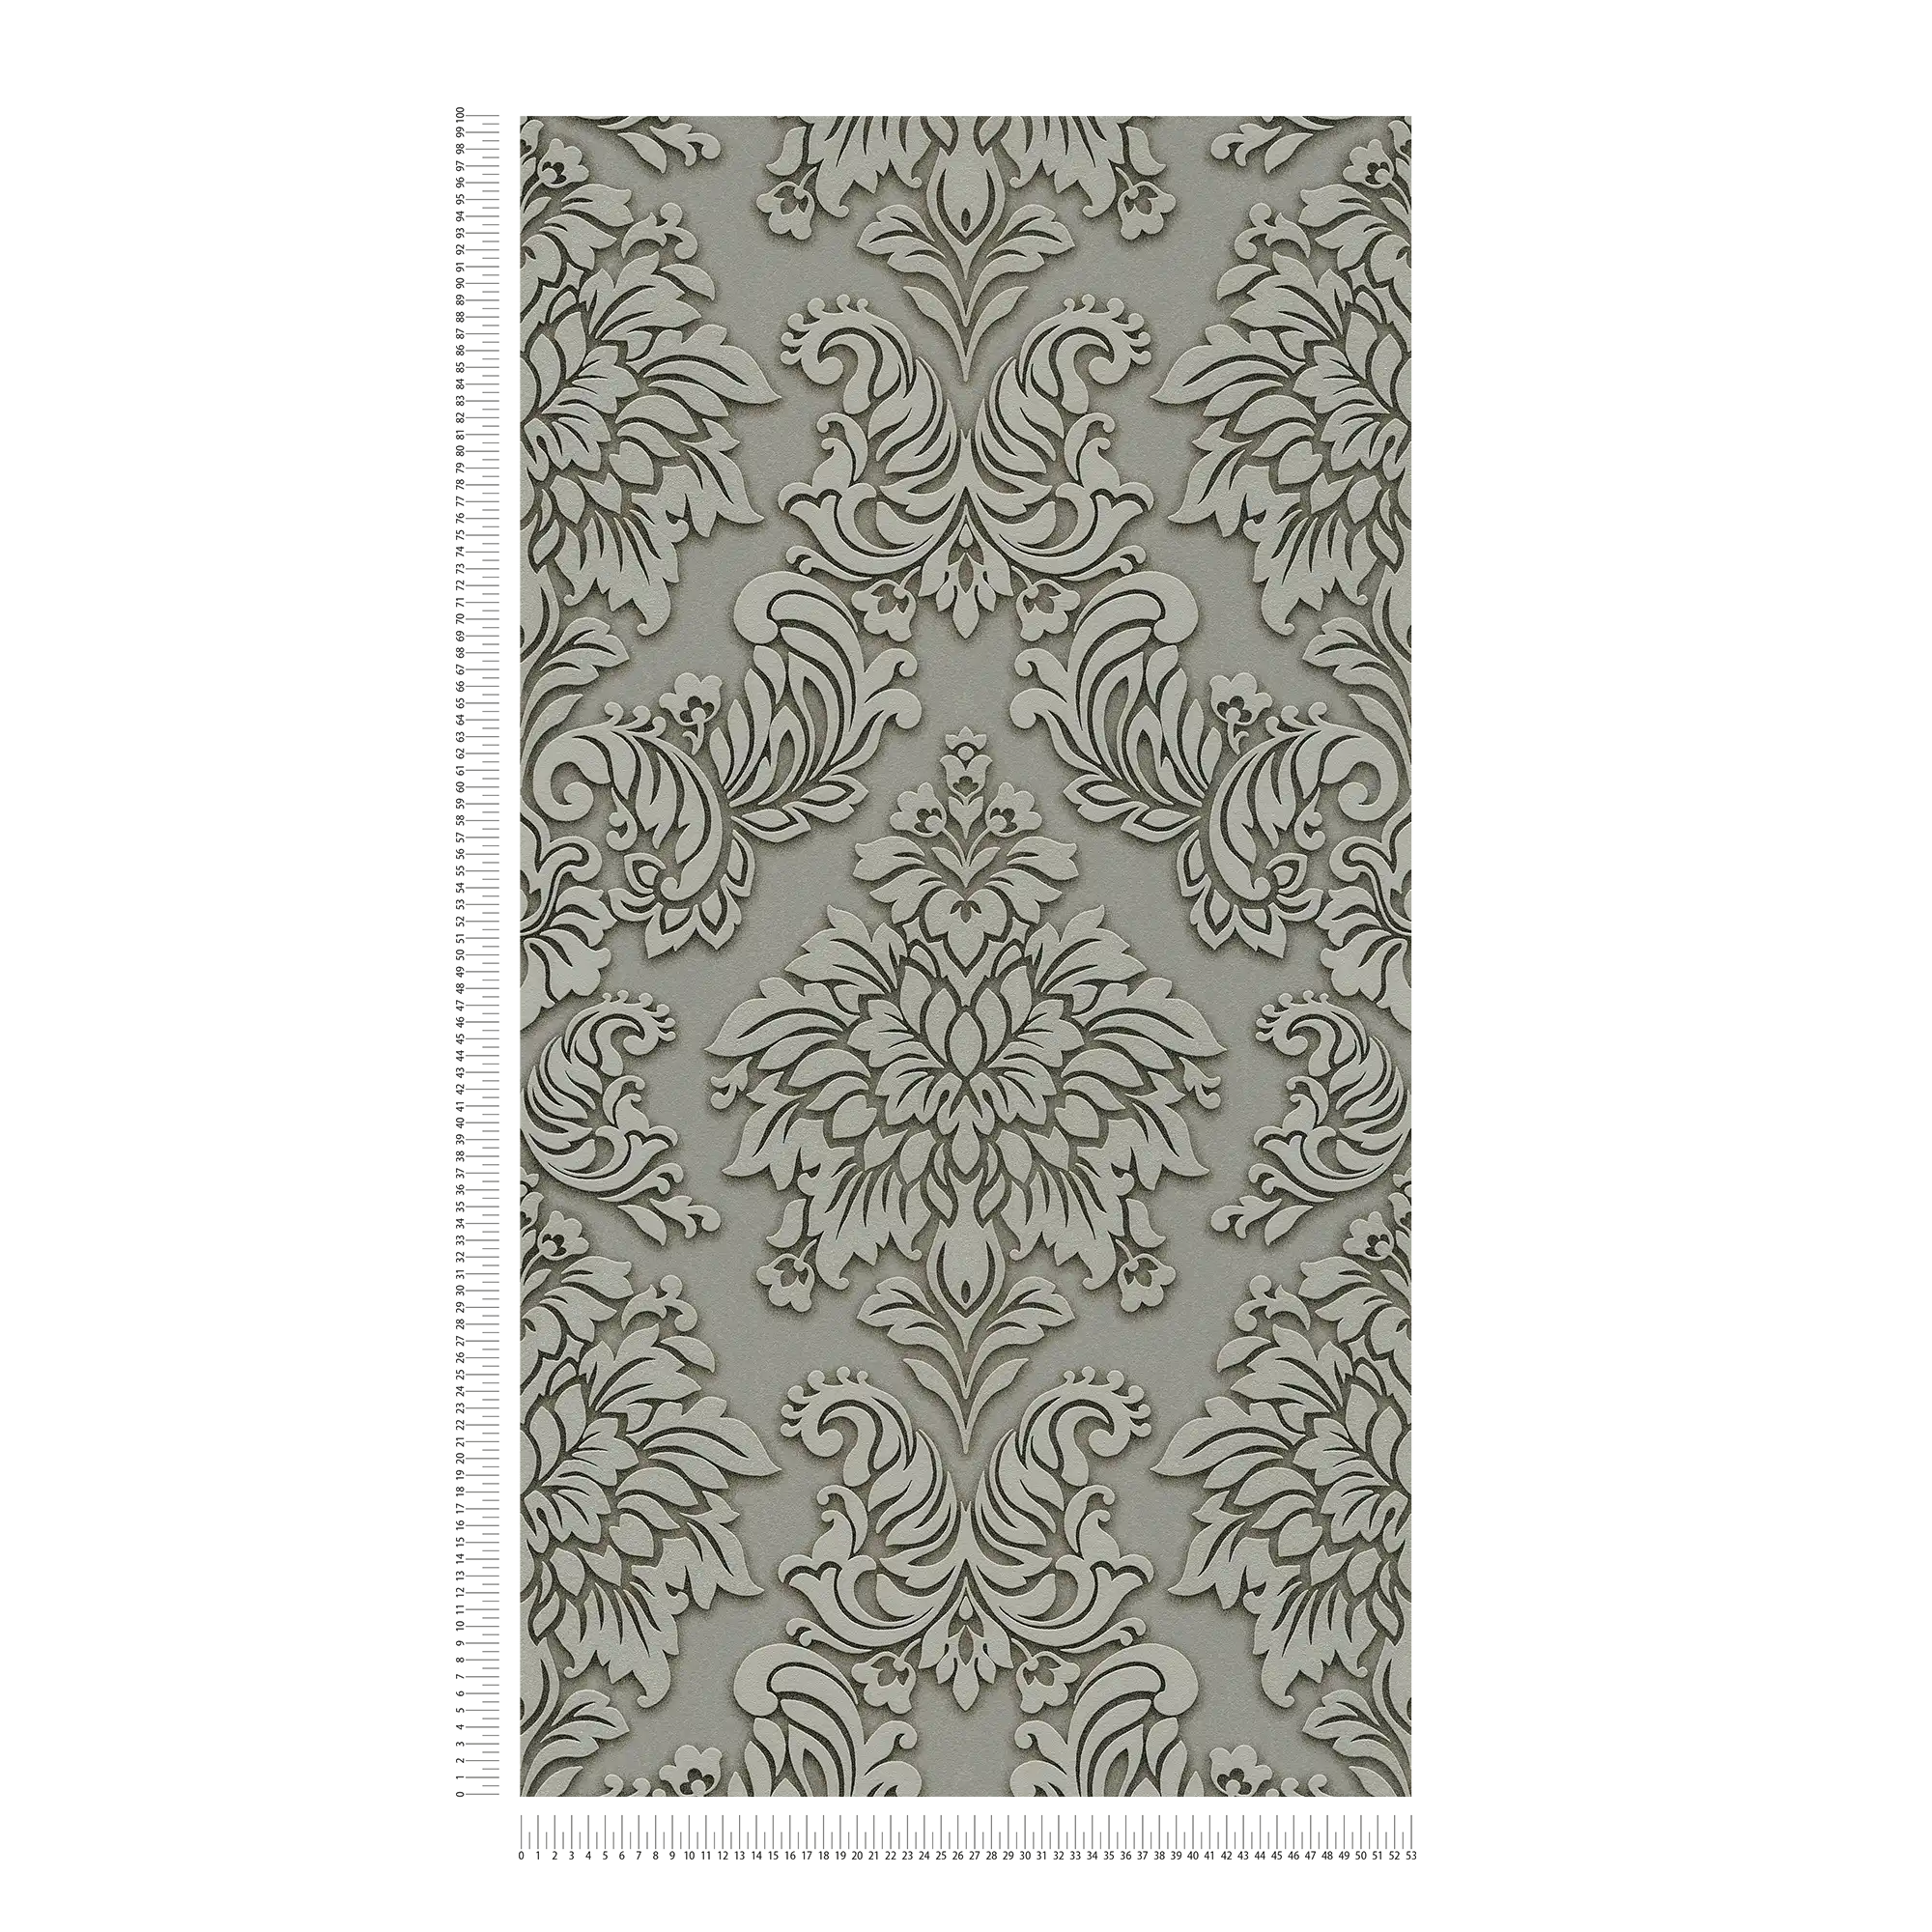             Barock Tapete Ornamente mit Glitzereffekt – Grau, Silber, Beige
        